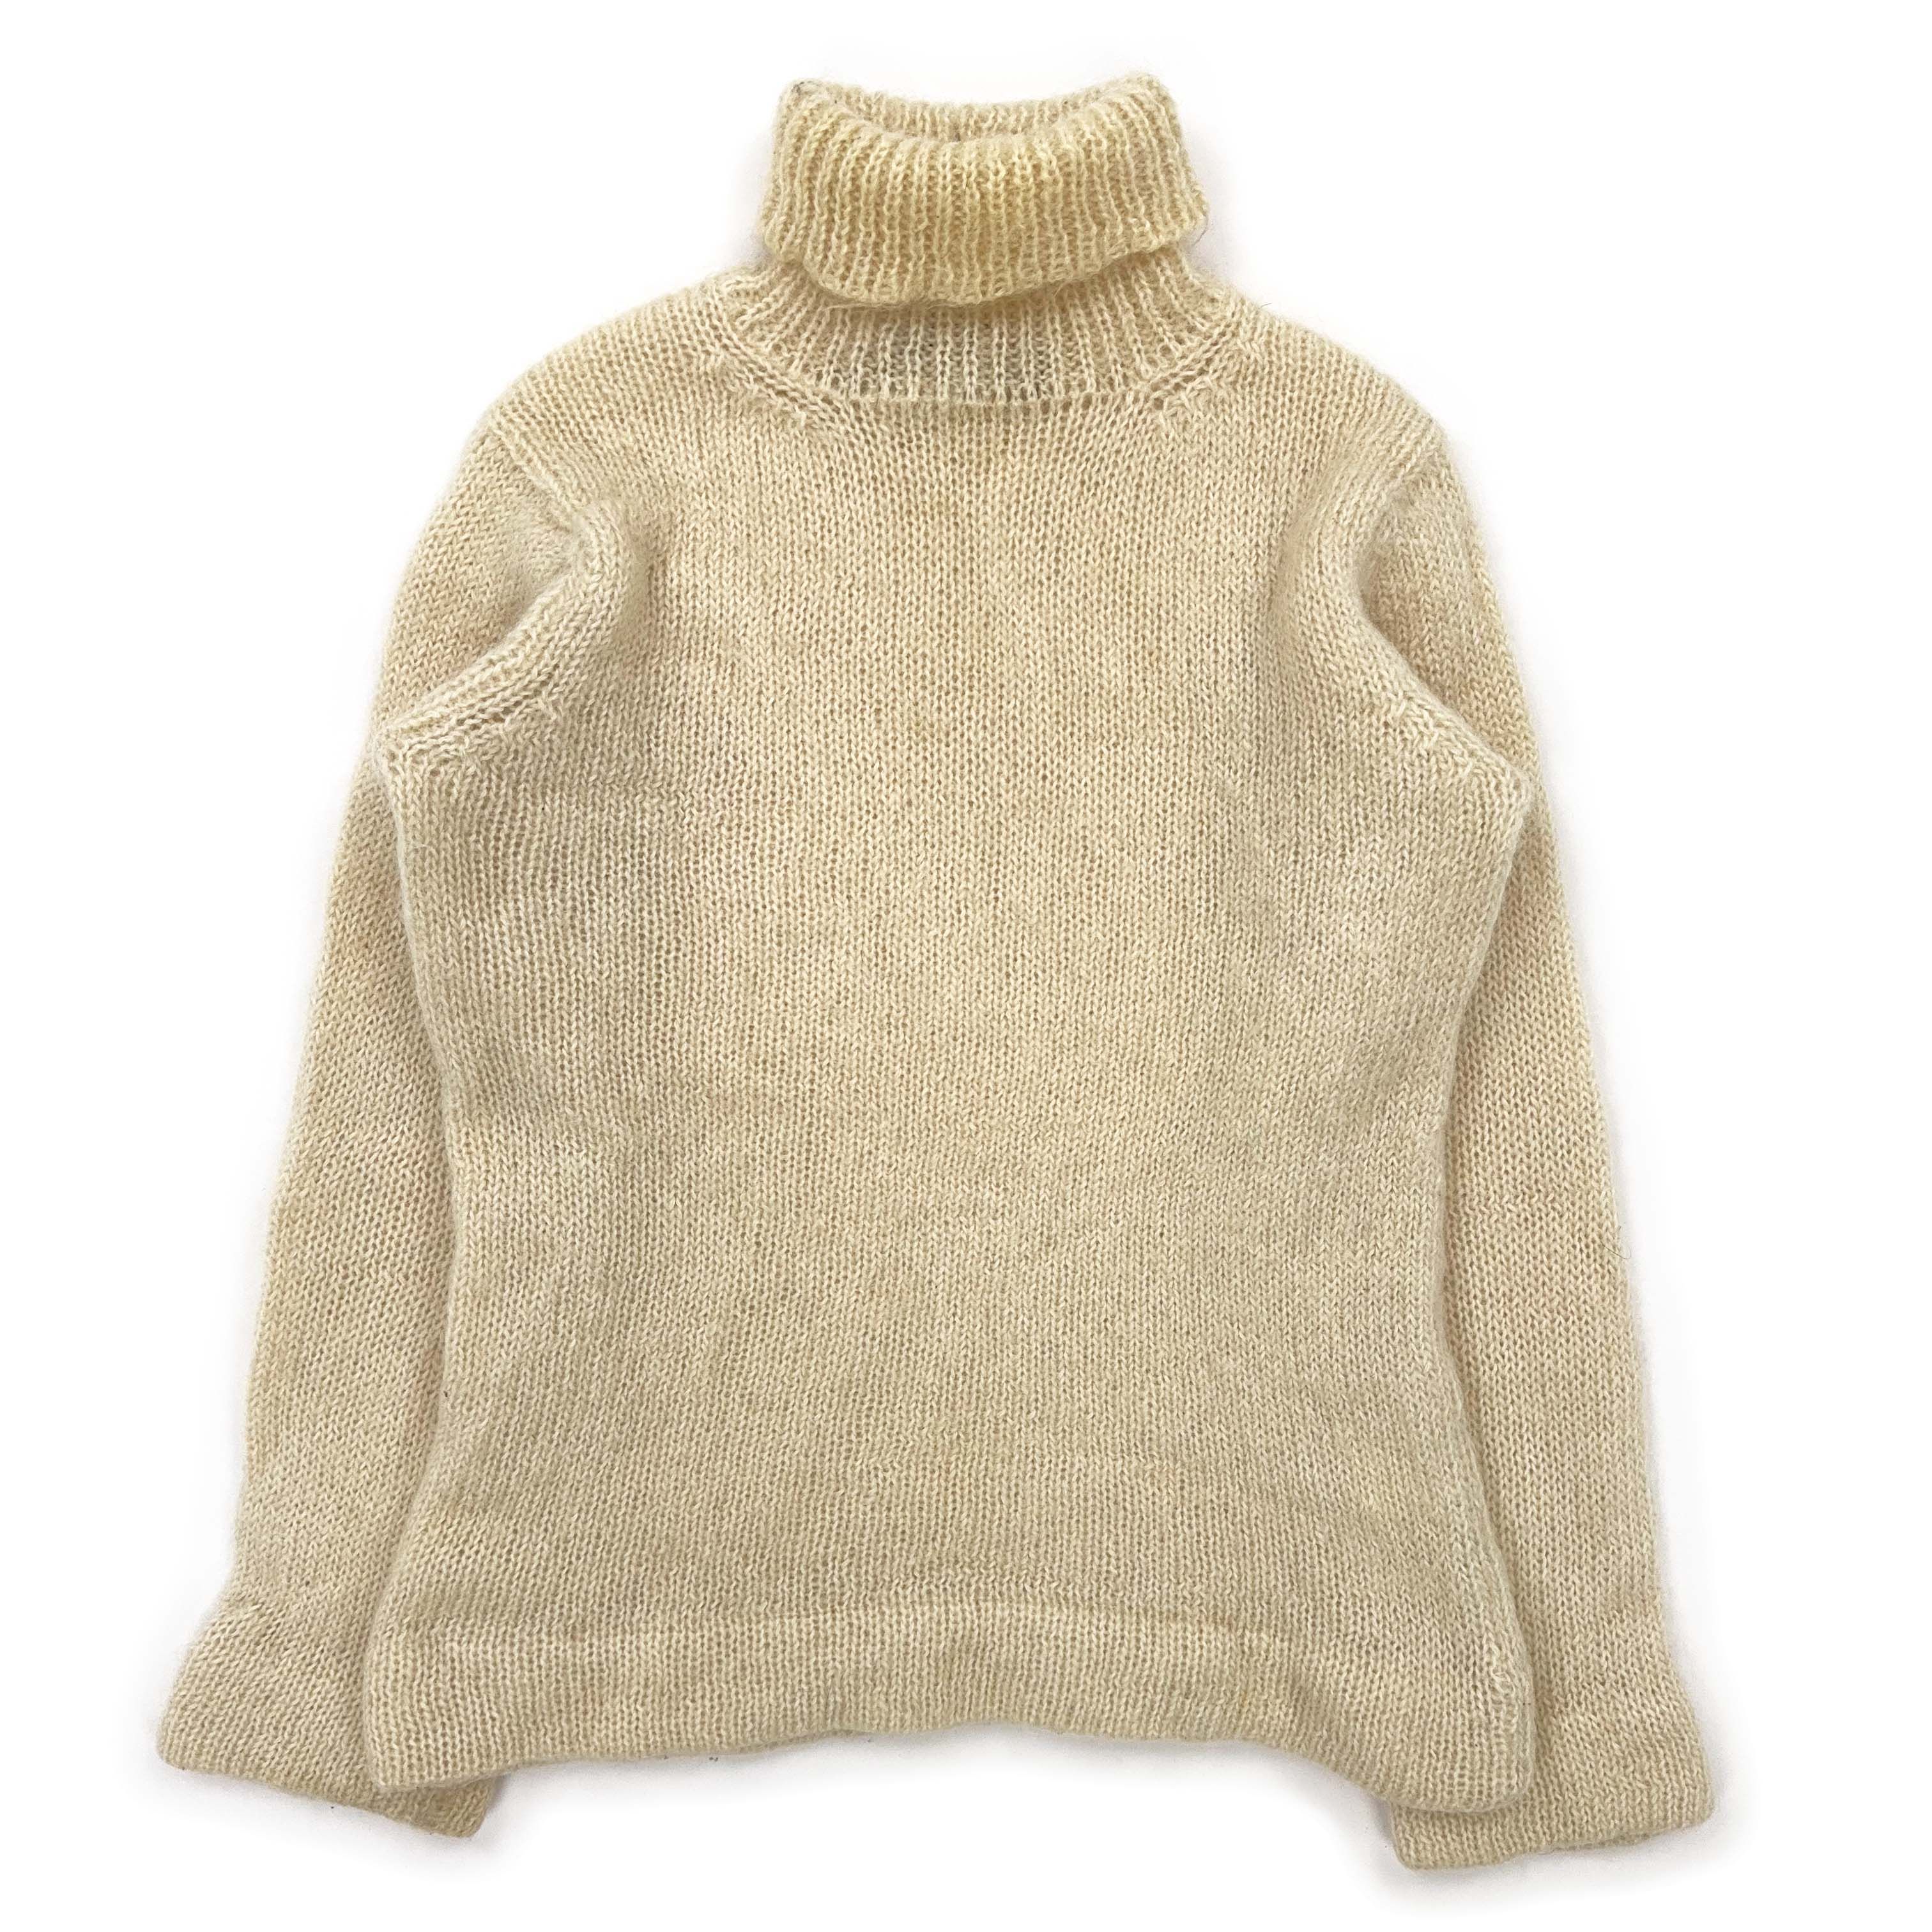 AW95 Knit Wool-Nylon Turtleneck Sweater - 1